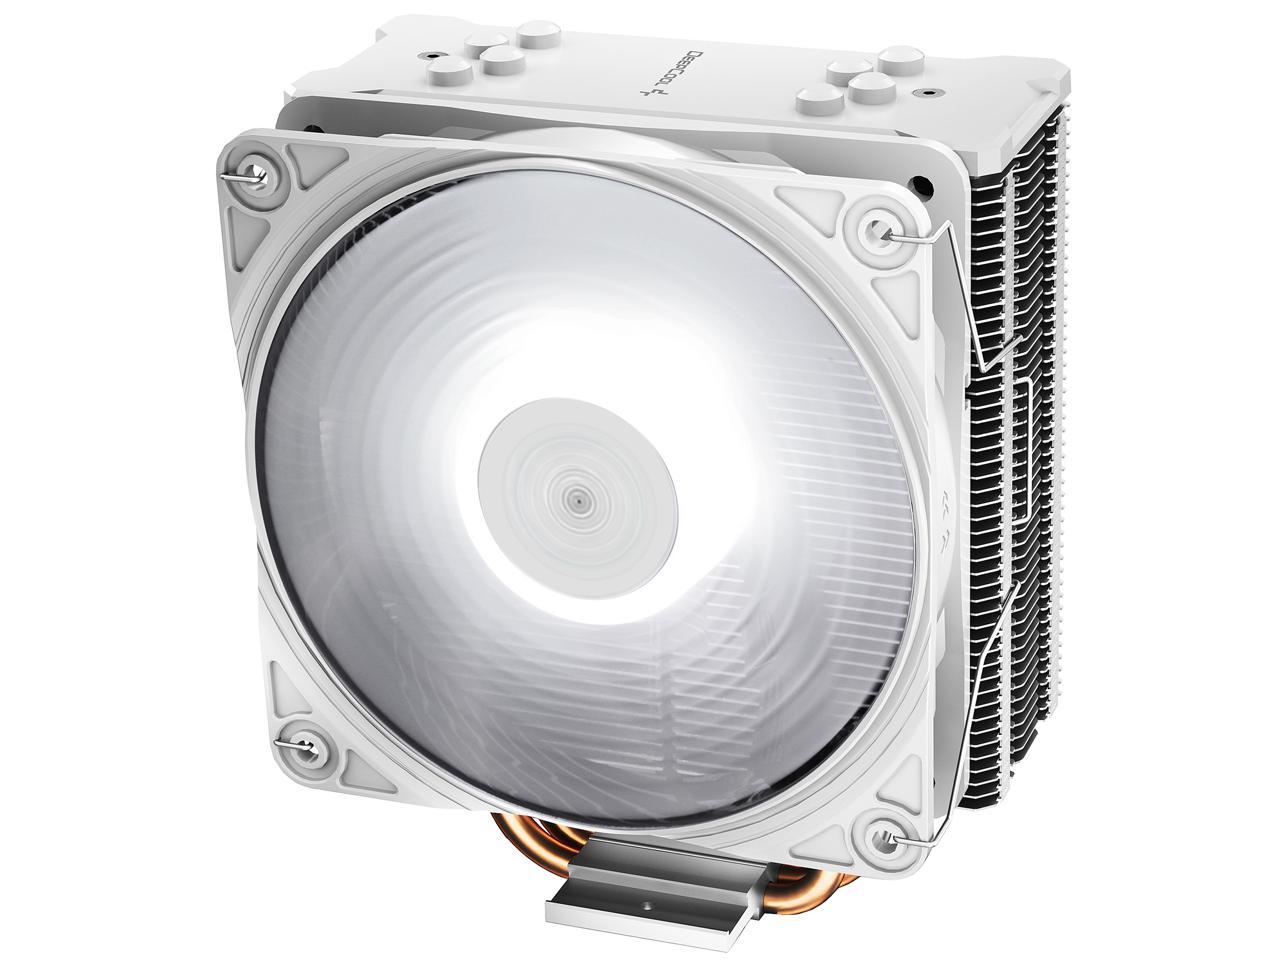 DEEPCOOL GAMMAXX GTE V2 CPU Air Cooler with 4 Heatpipes and a 120mm RGB PWM Fan 4-Pin 12V RGB Motherboard Control for Intel LGA 1200 1151 2011 AMD Ryzen AM4 